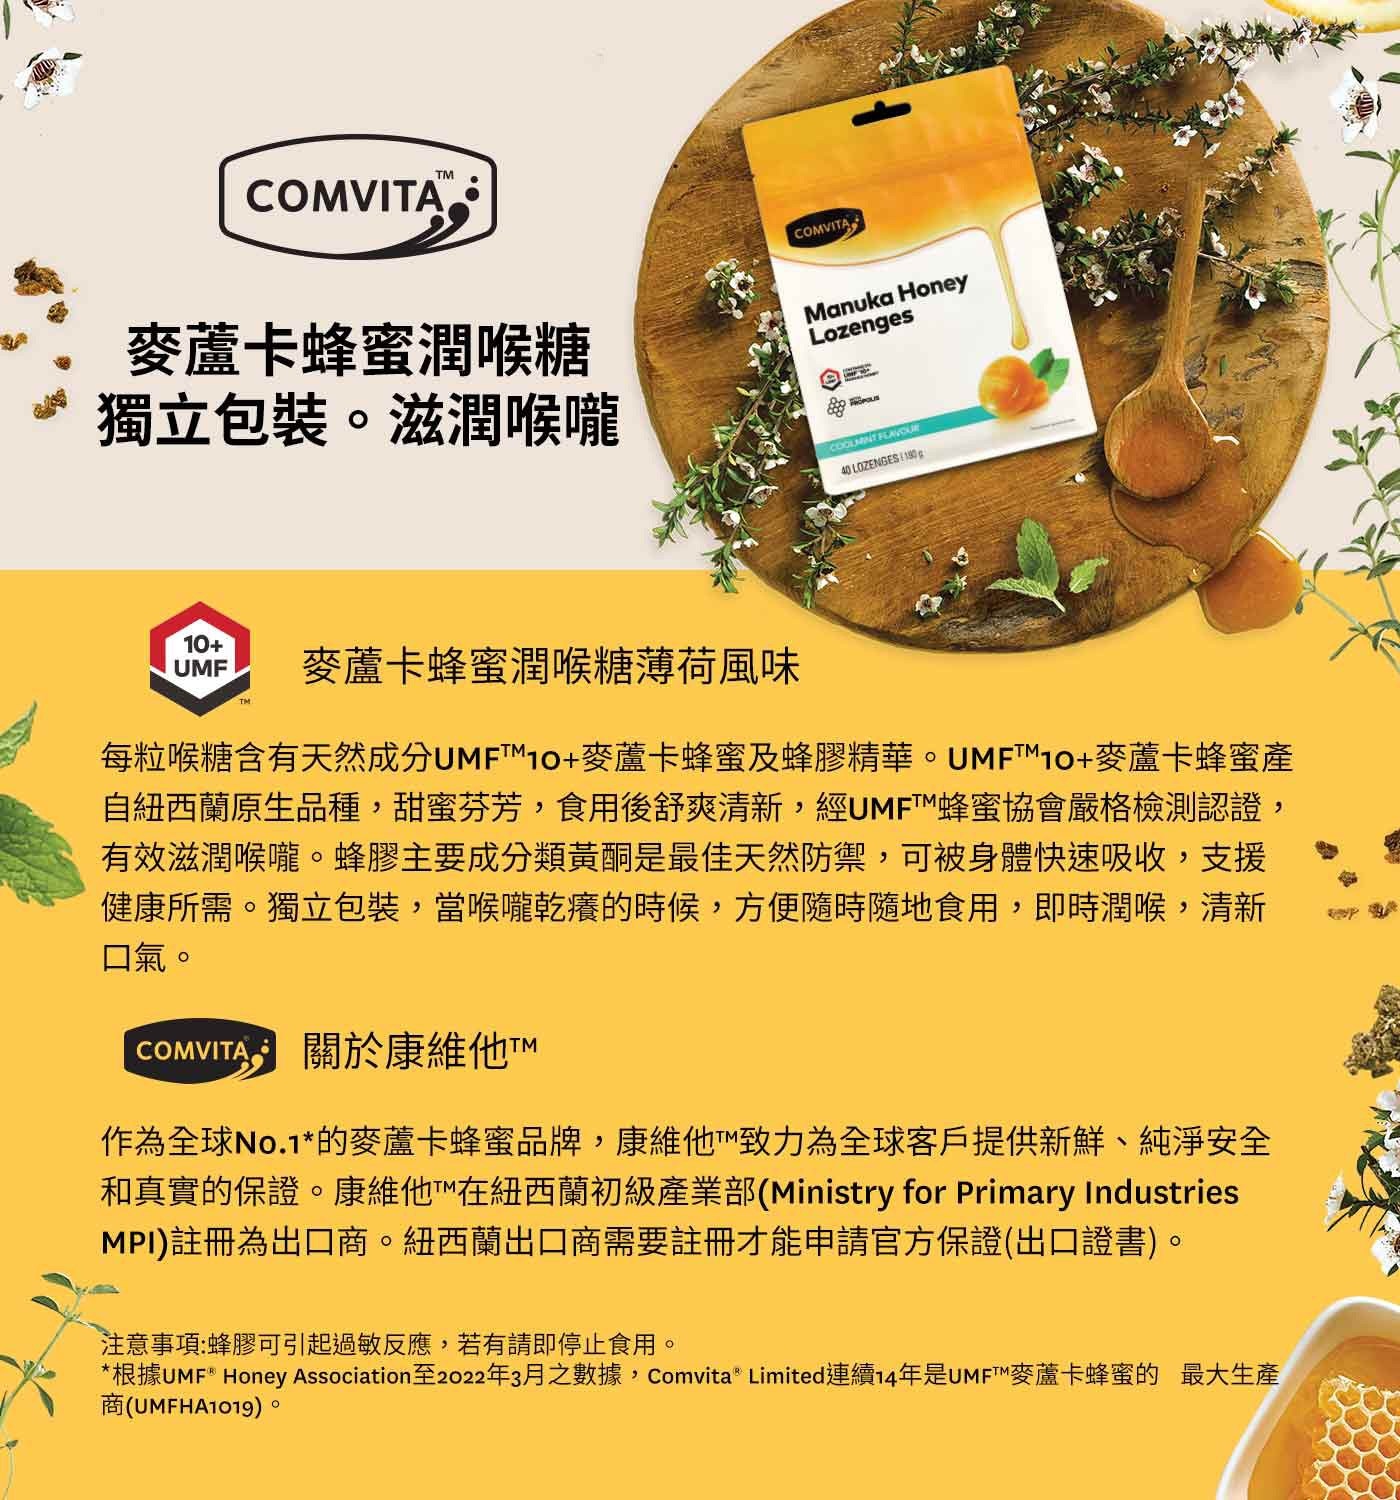 Comvita 康維他麥蘆卡蜂蜜潤喉糖薄荷風味幫助潤喉、舒爽清新，獨立包裝，方便攜帶。